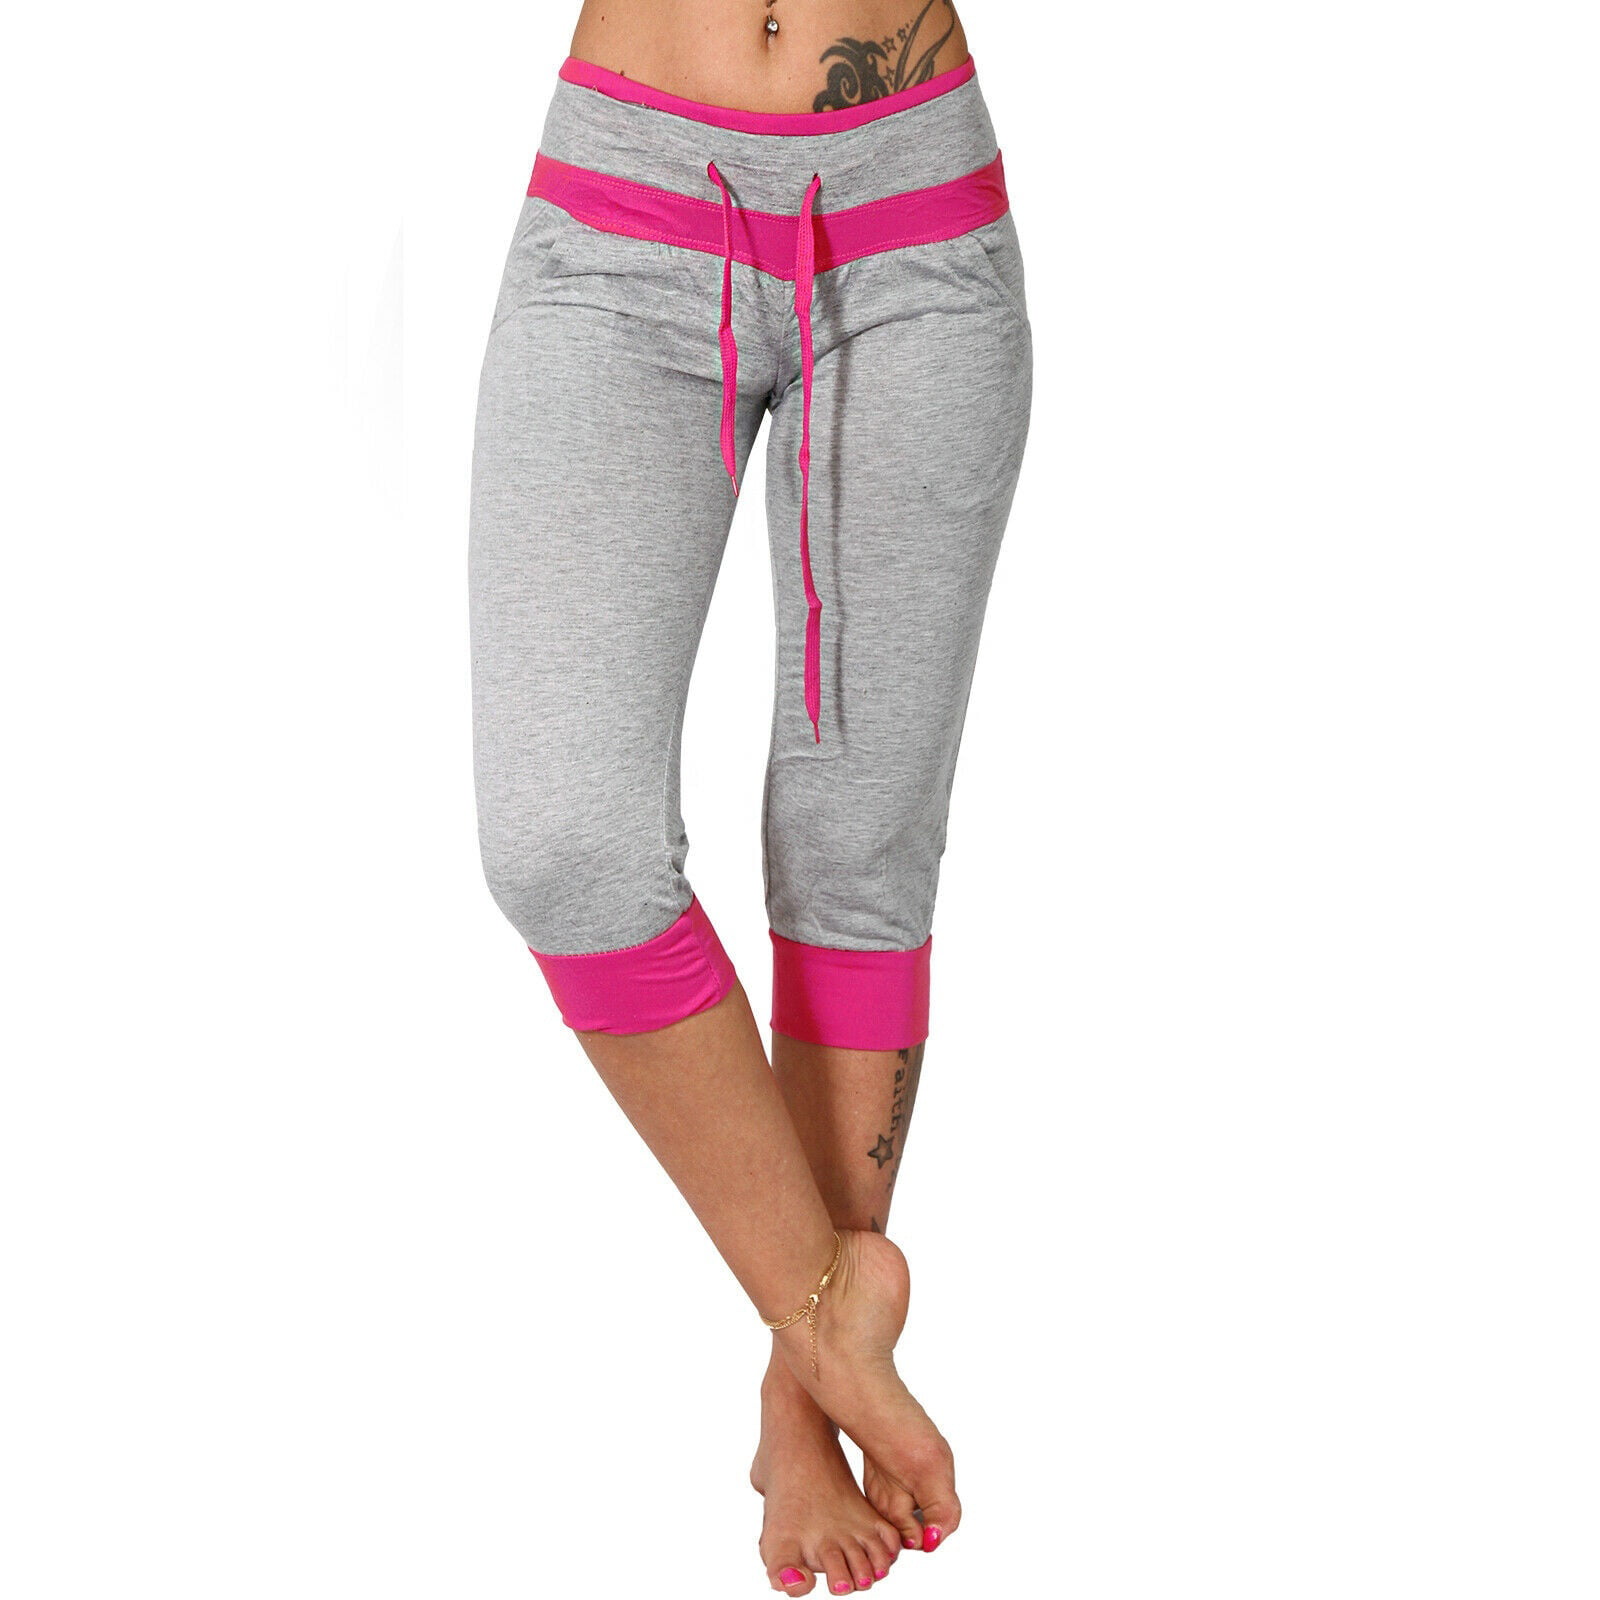 SySea - Patchowork Women Knee-Length Sport Capris Pants - Walmart.com ...